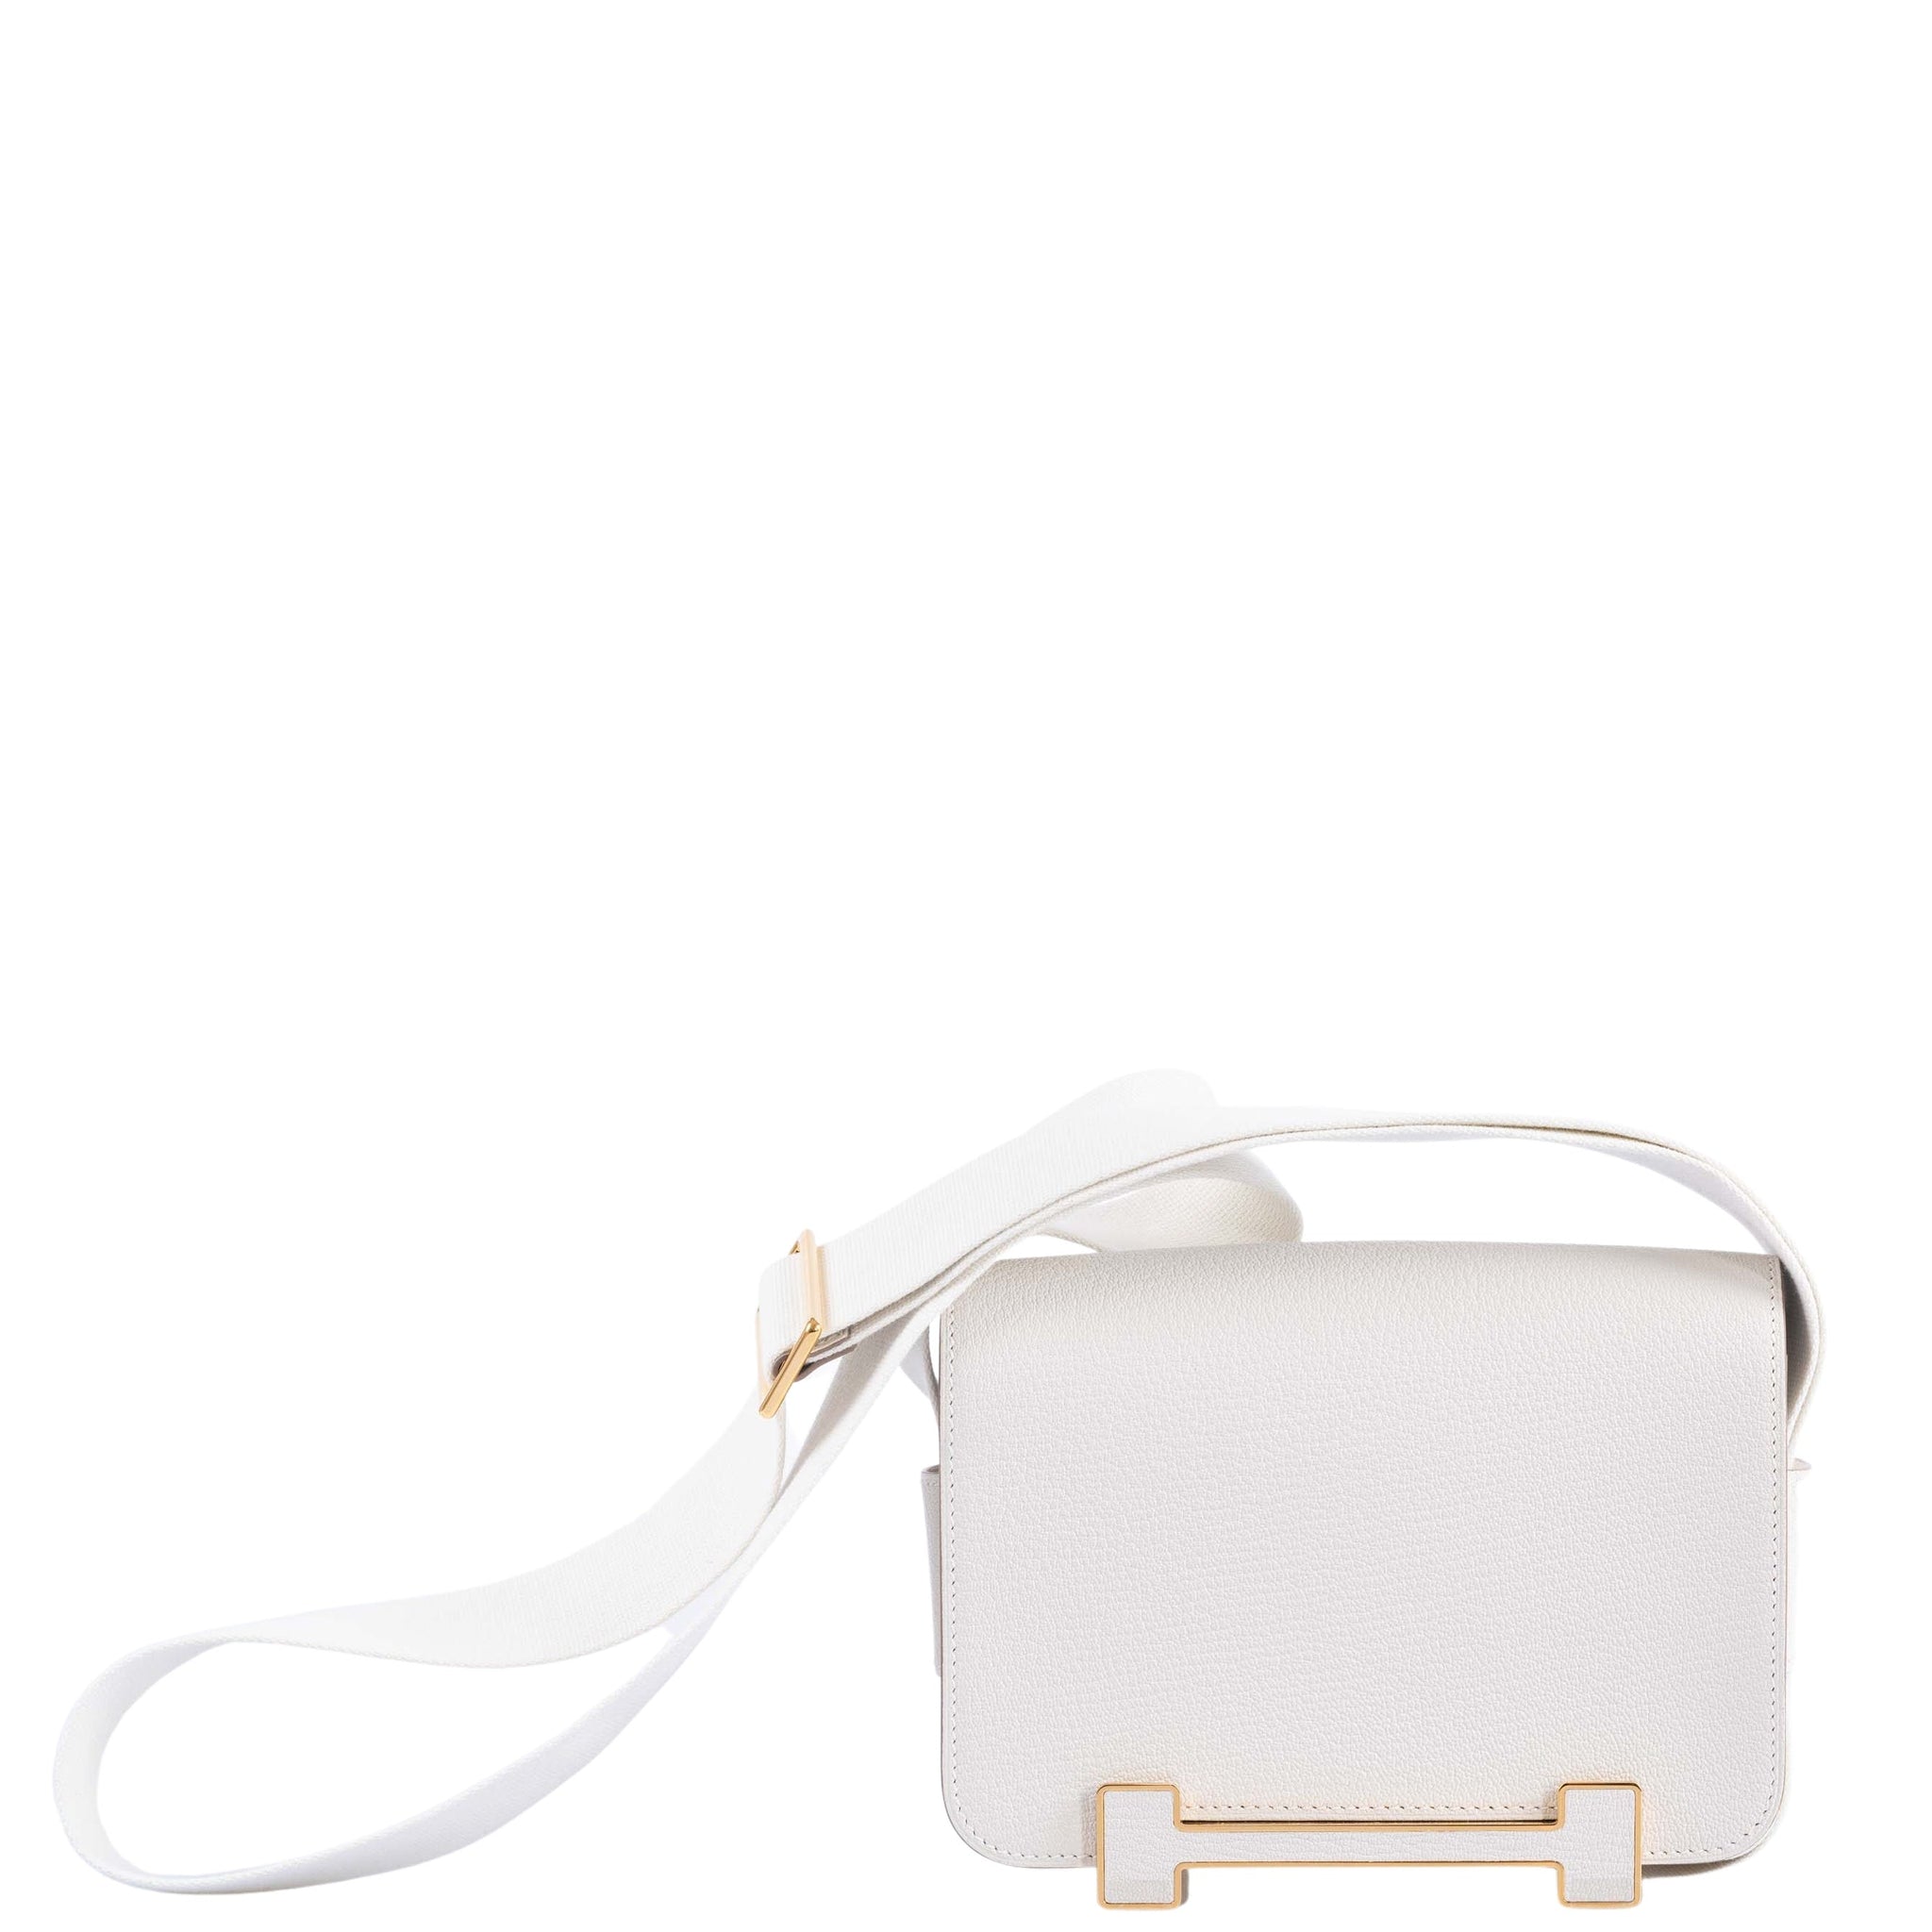 Top Grain Leather Inspired Birkin Handbag | Luxury Designer Bags Small-25cm / Black